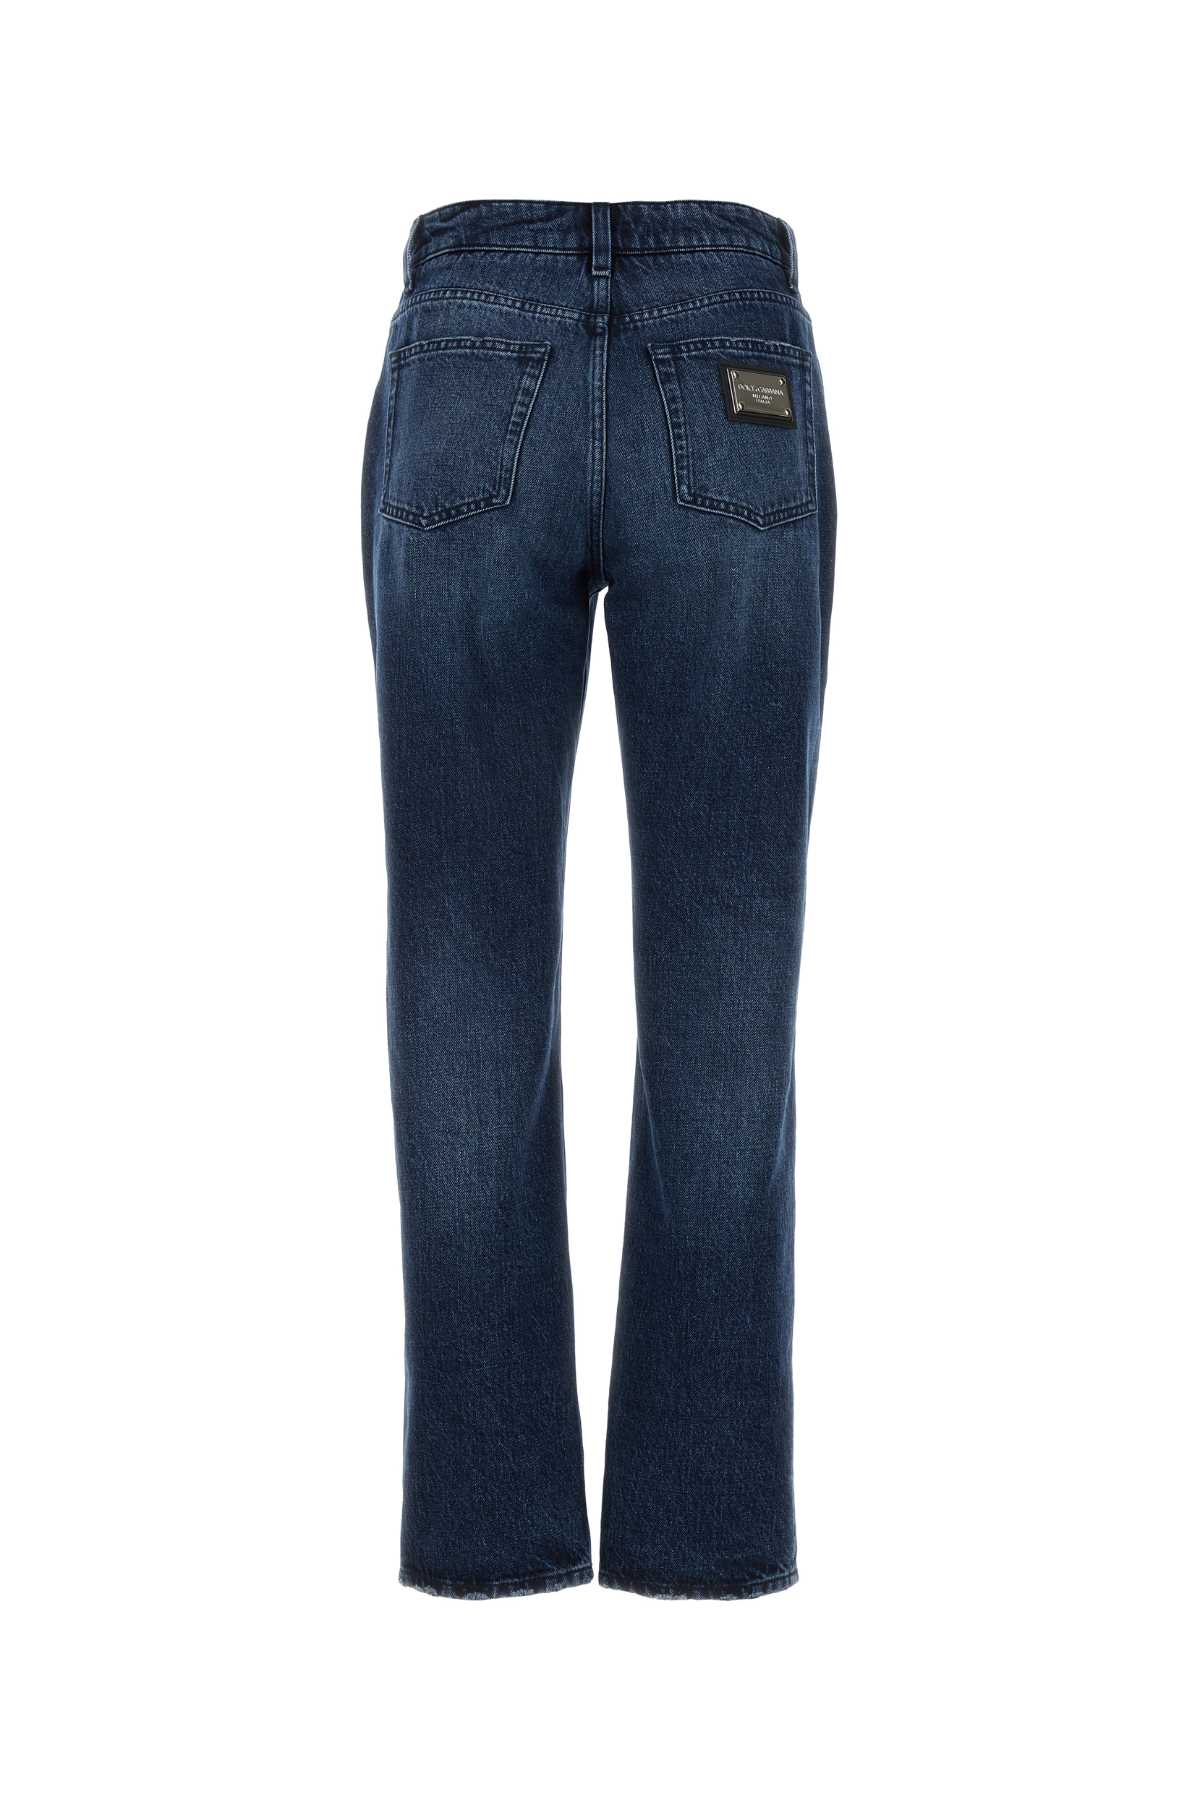 Shop Dolce & Gabbana Denim Jeans In Varianteabbinata